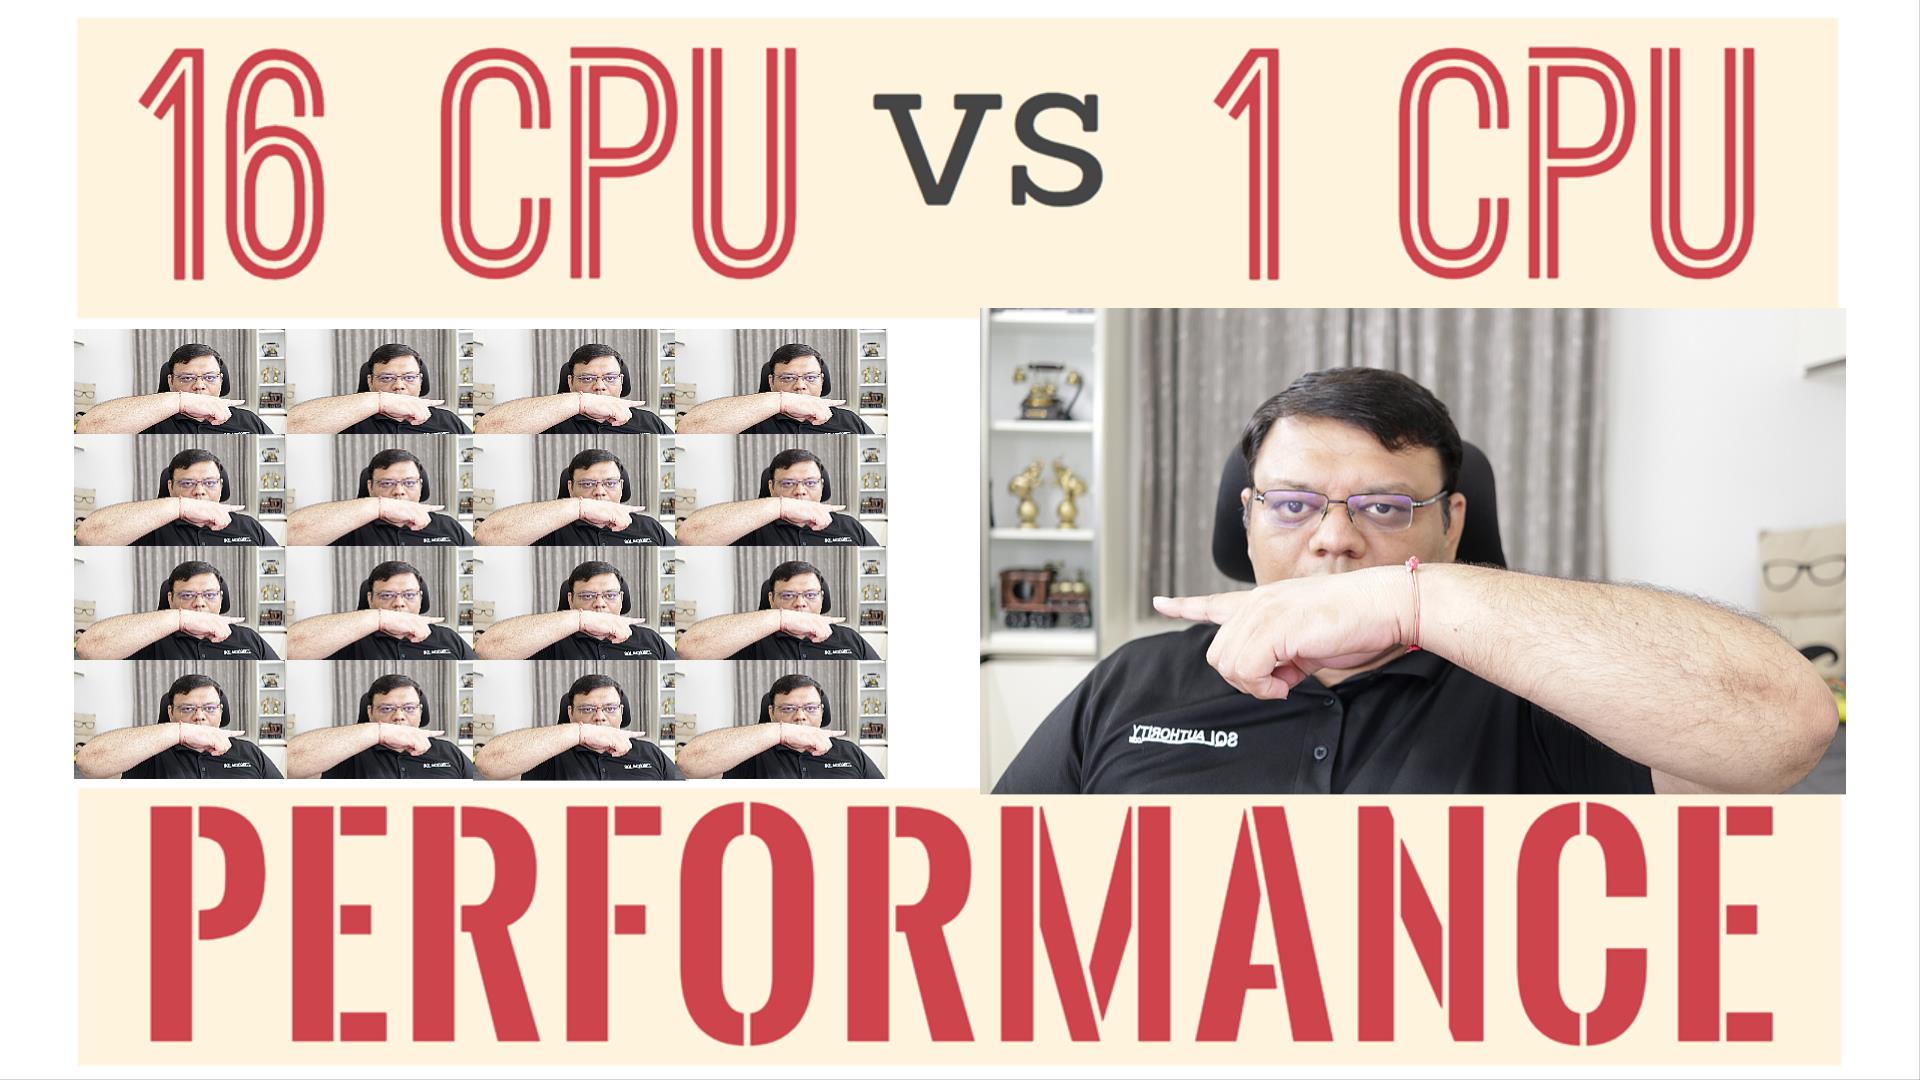 SQL SERVER – 16 CPU vs 1 CPU : Performance